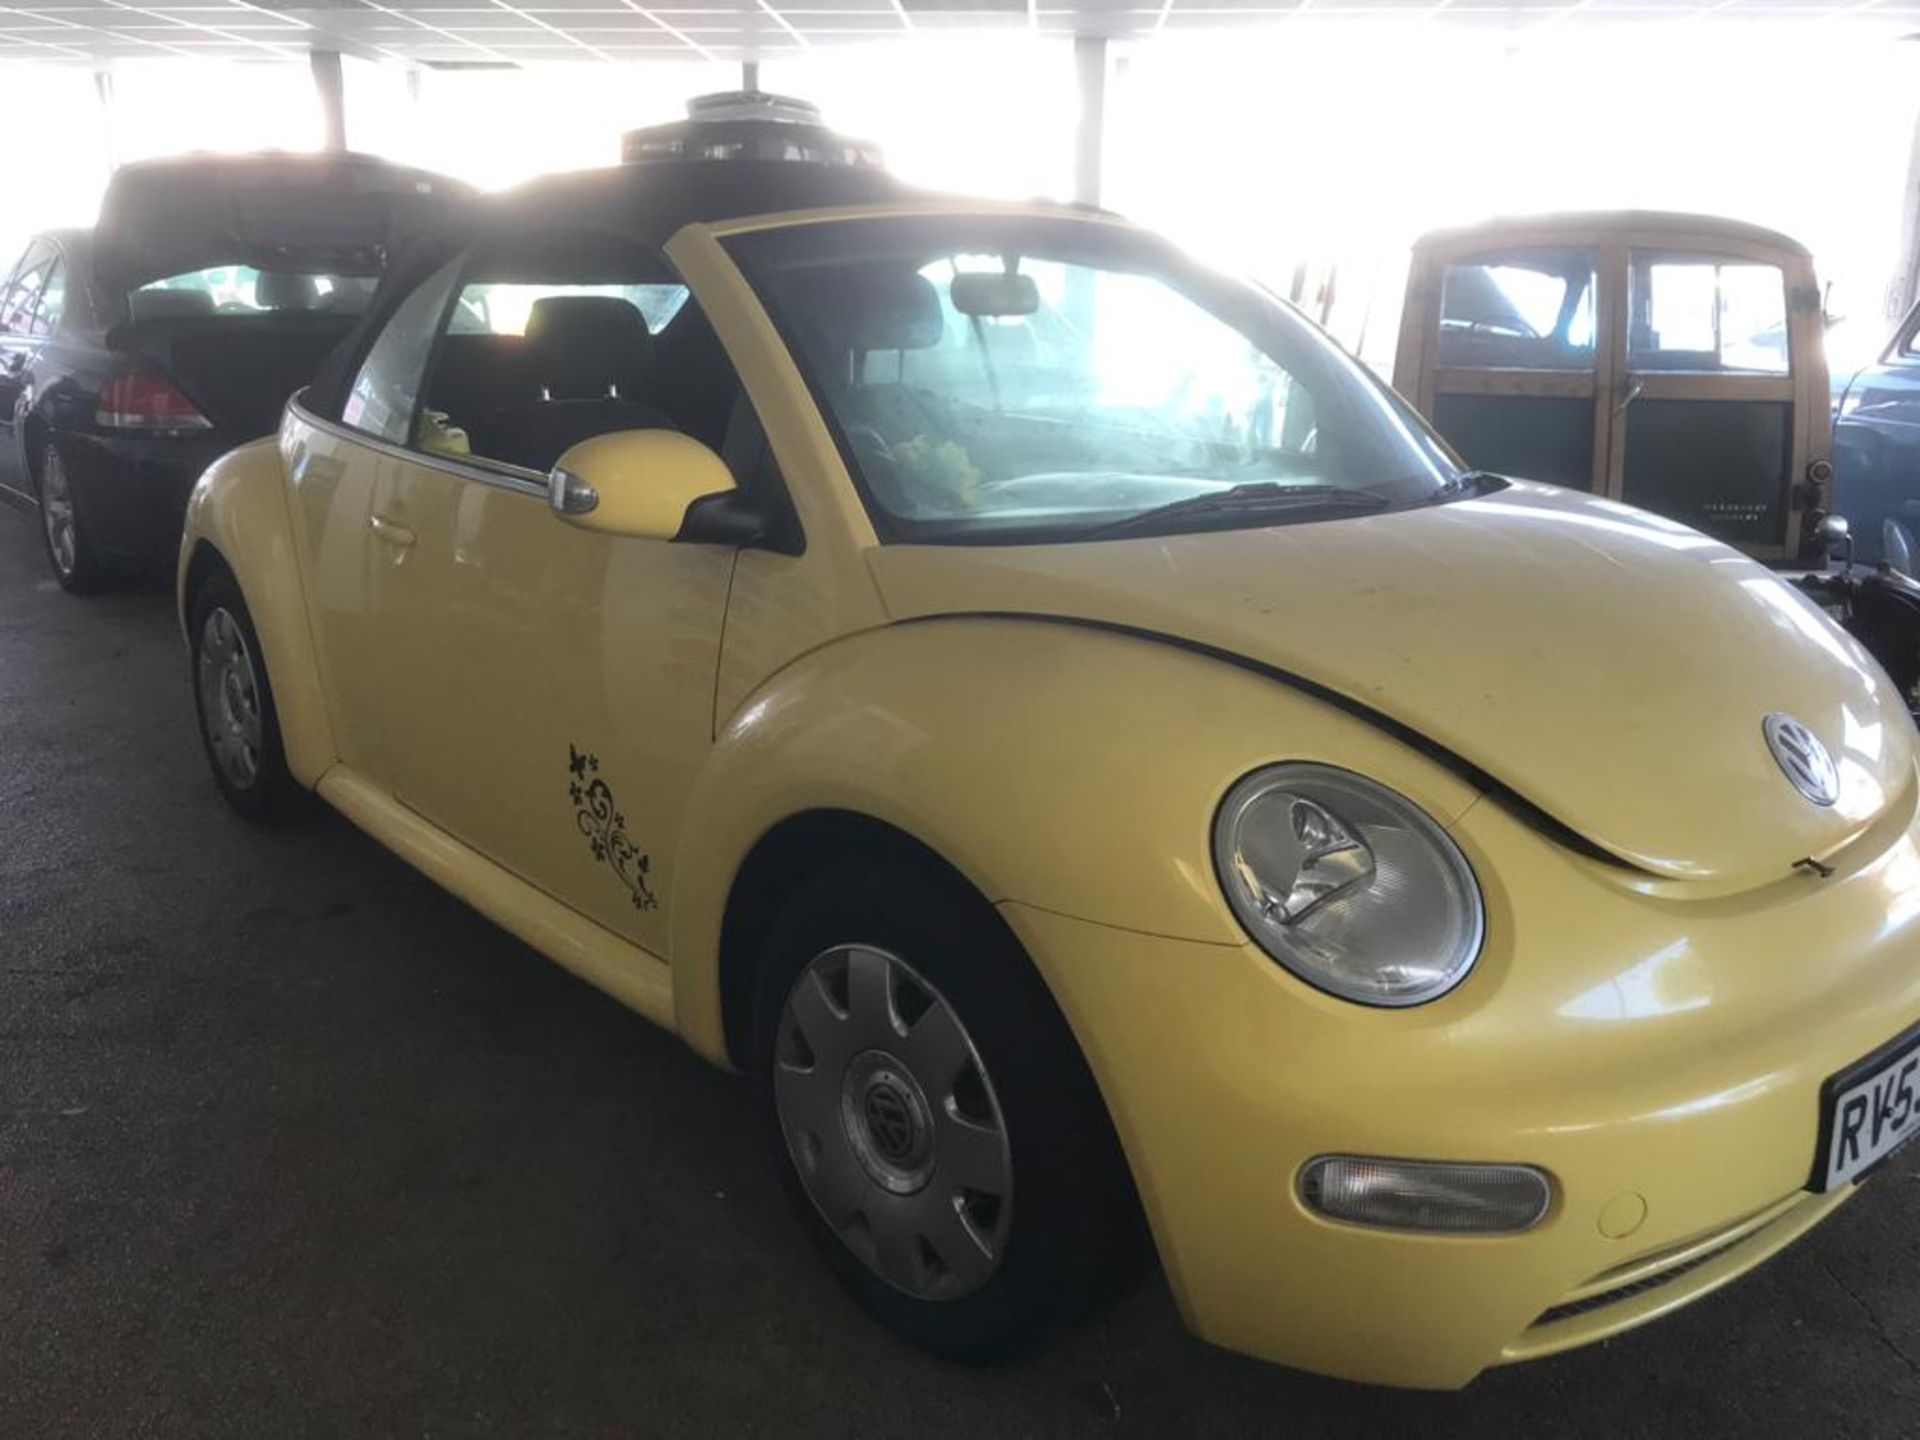 VW Beetle Convertible - Image 2 of 6